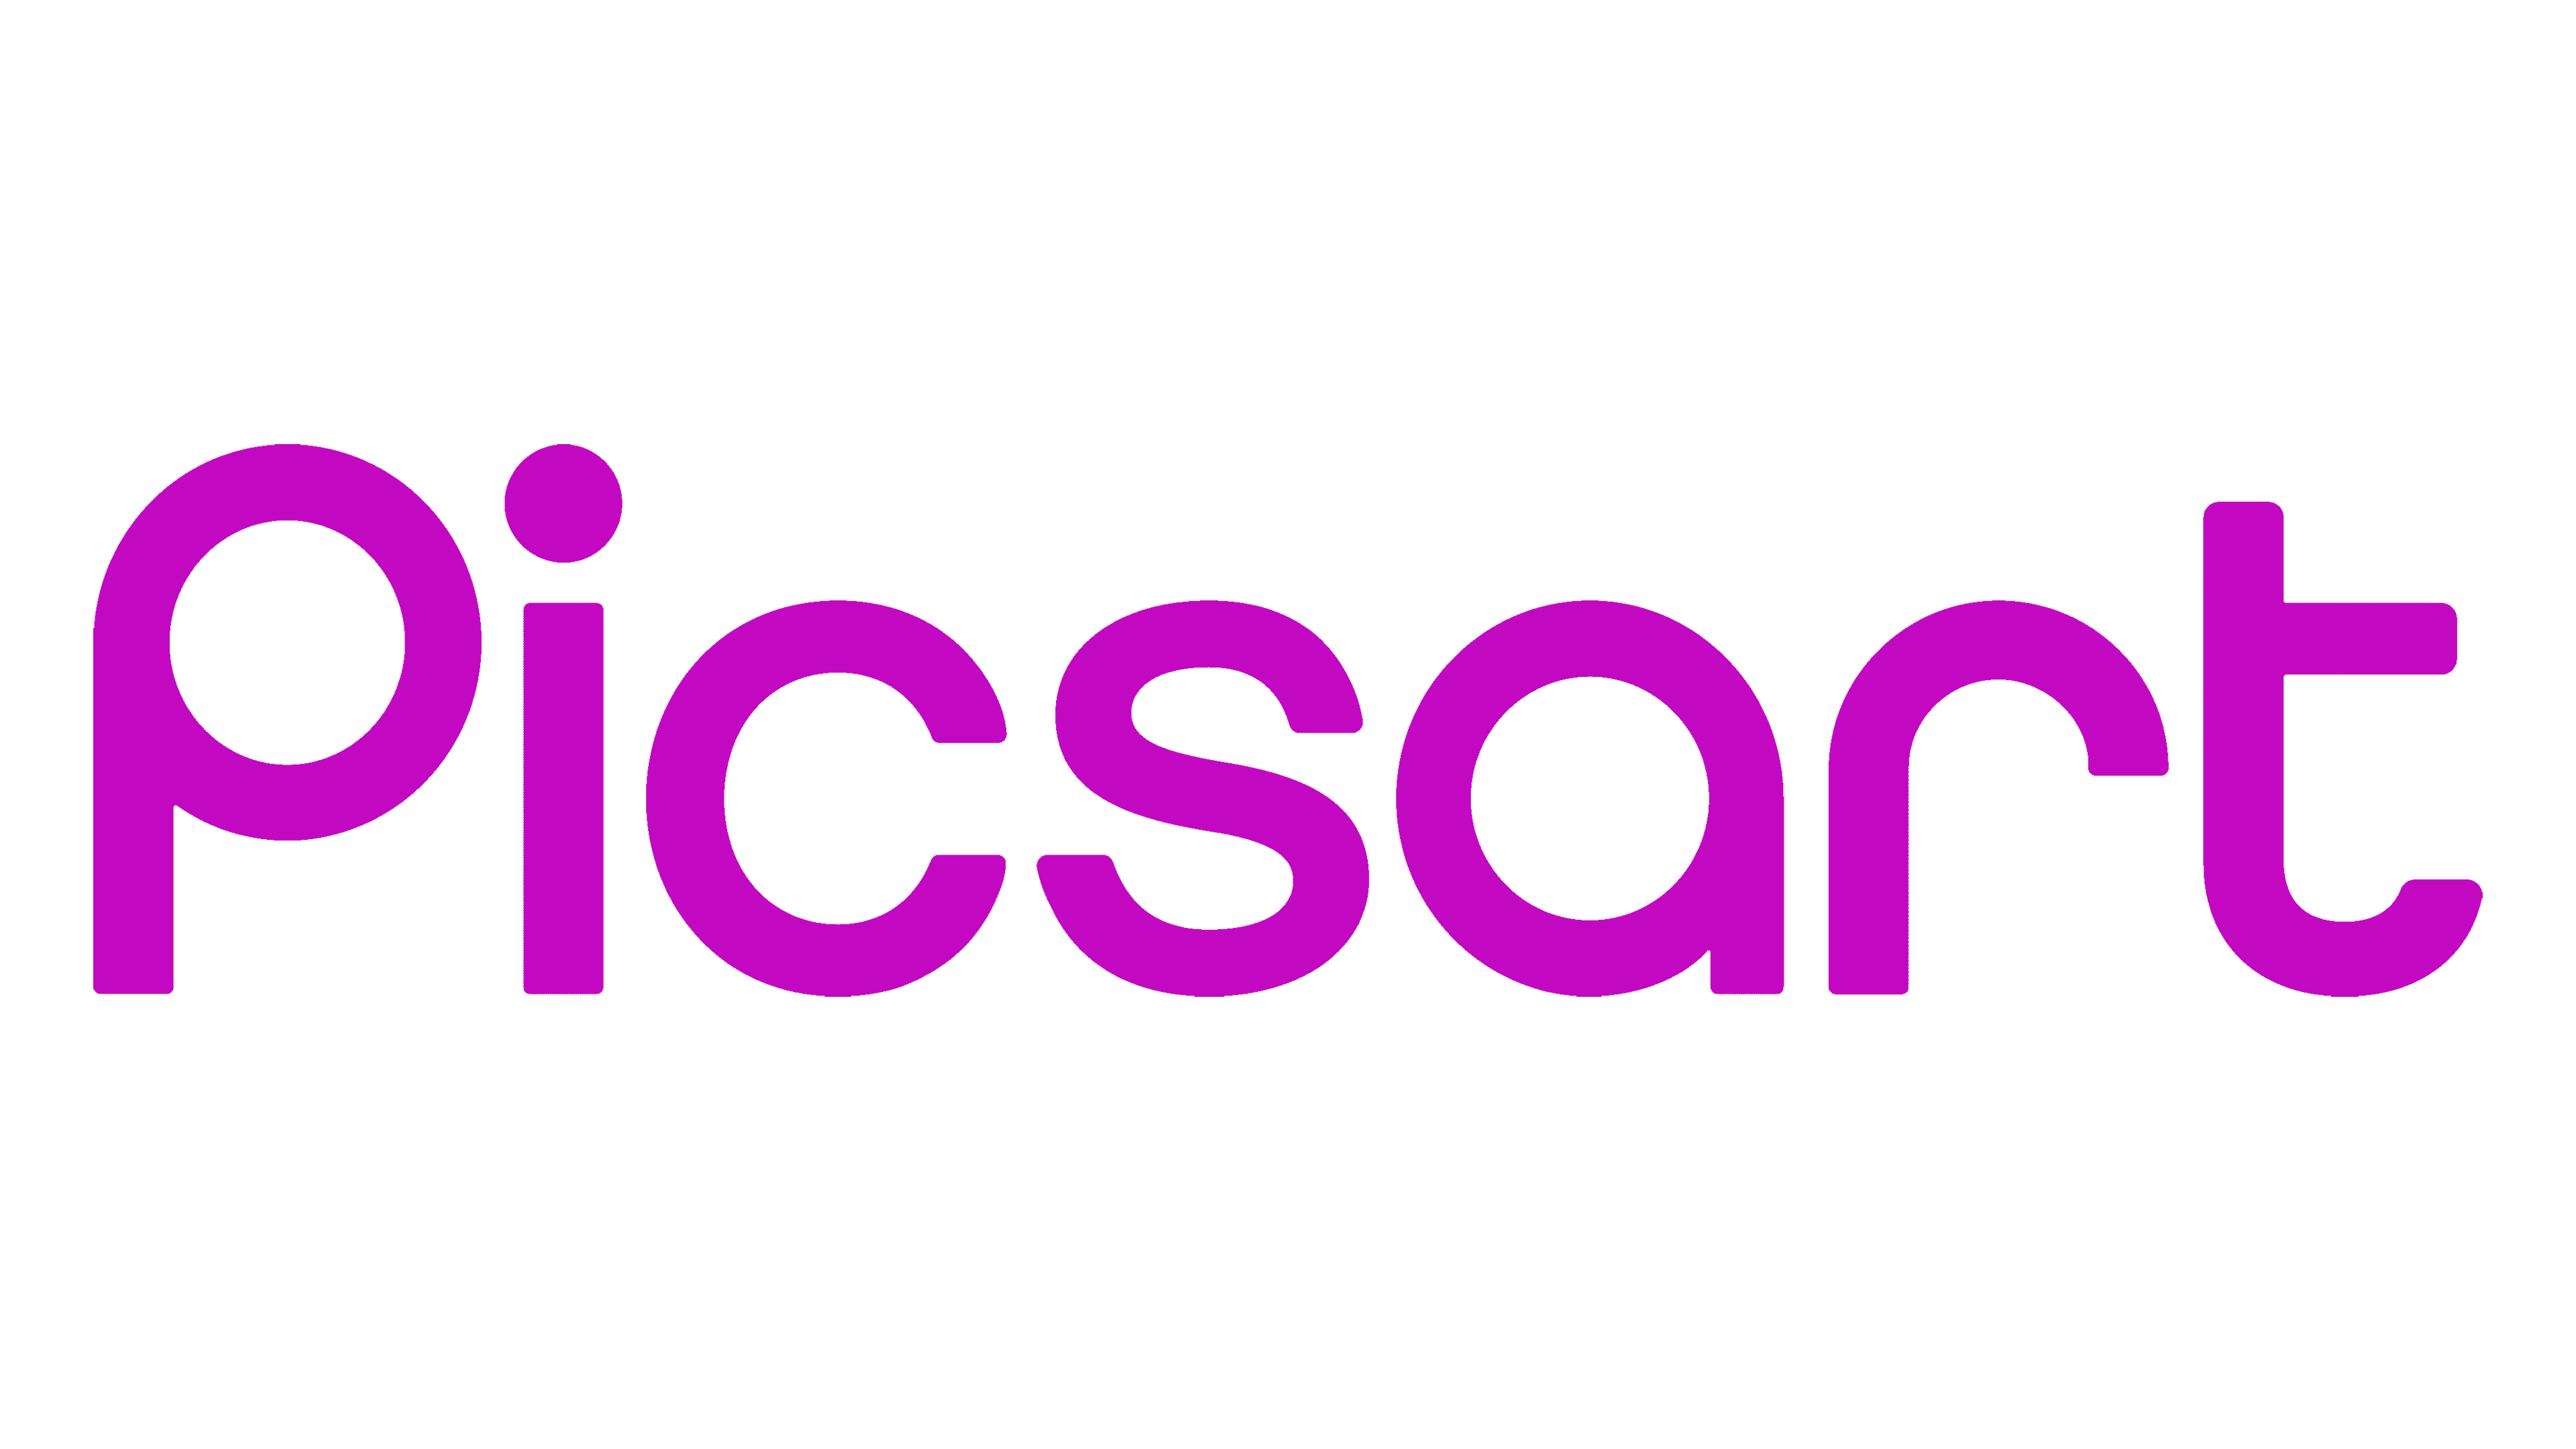 File:Picsart (software company) logo.svg - Wikipedia